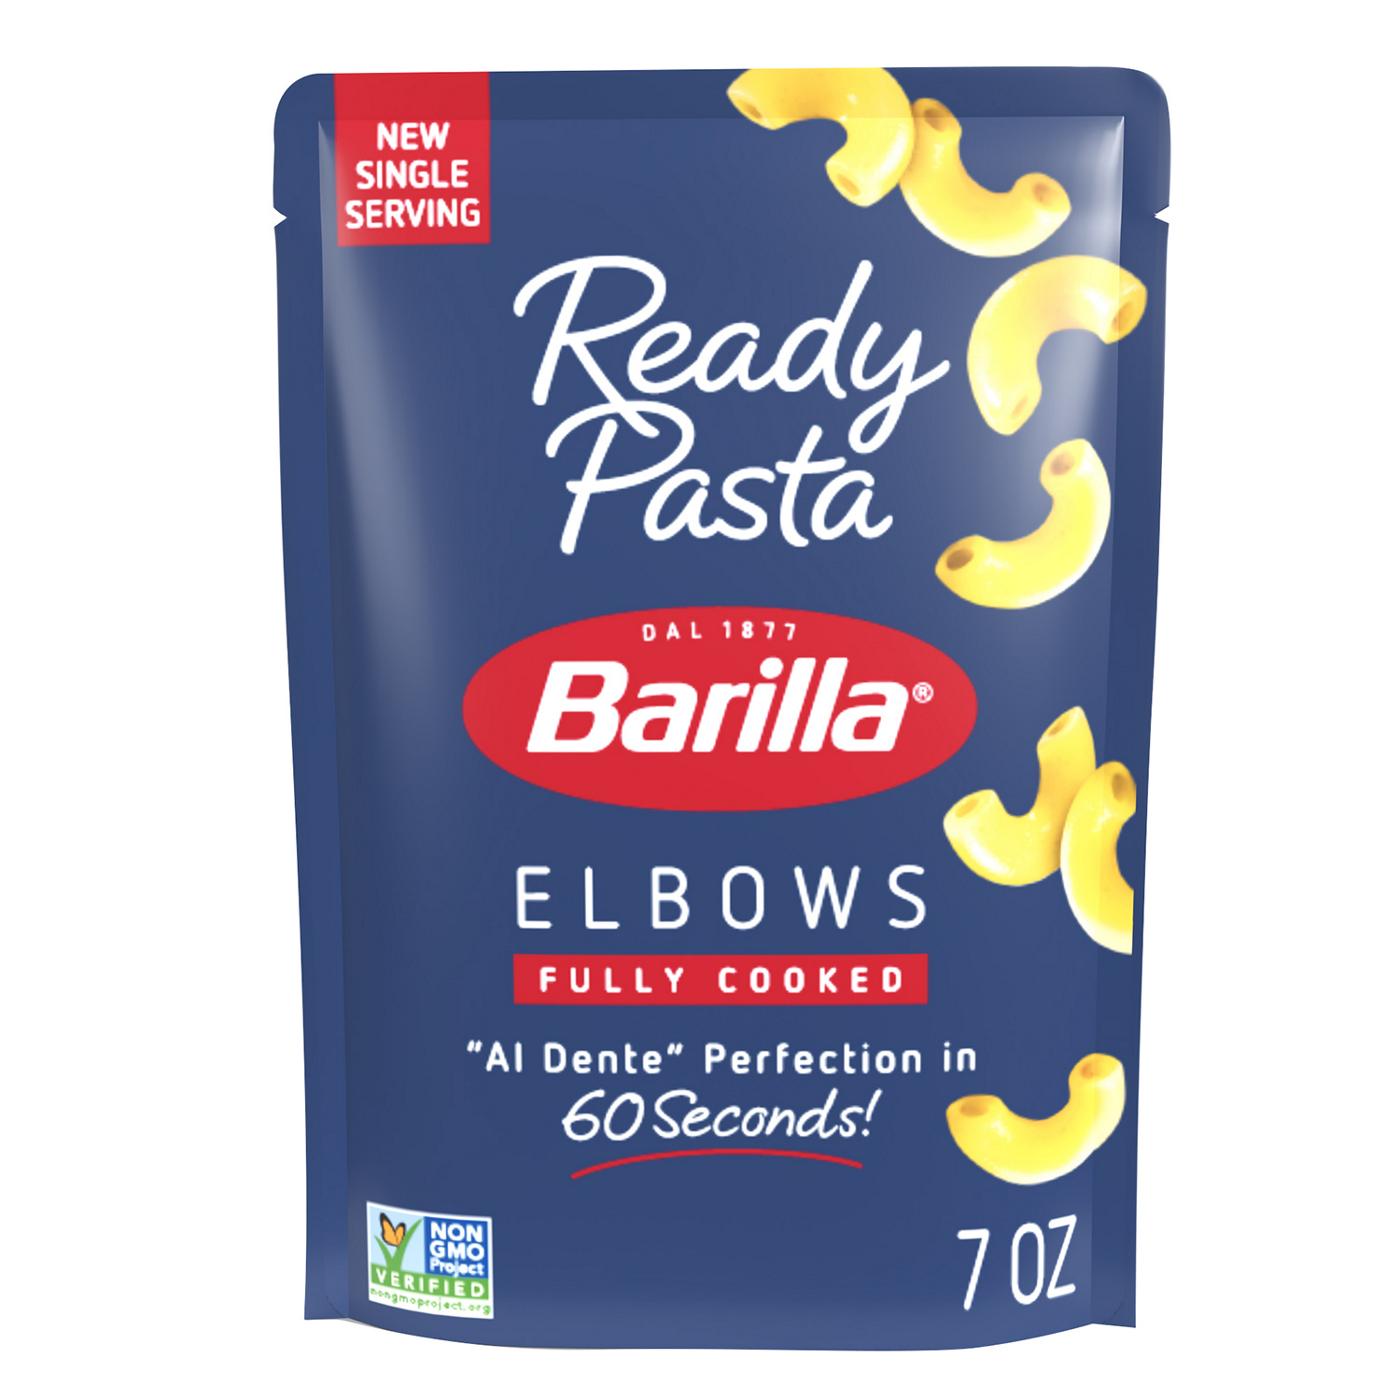 Barilla Ready Pasta Elbows; image 1 of 5